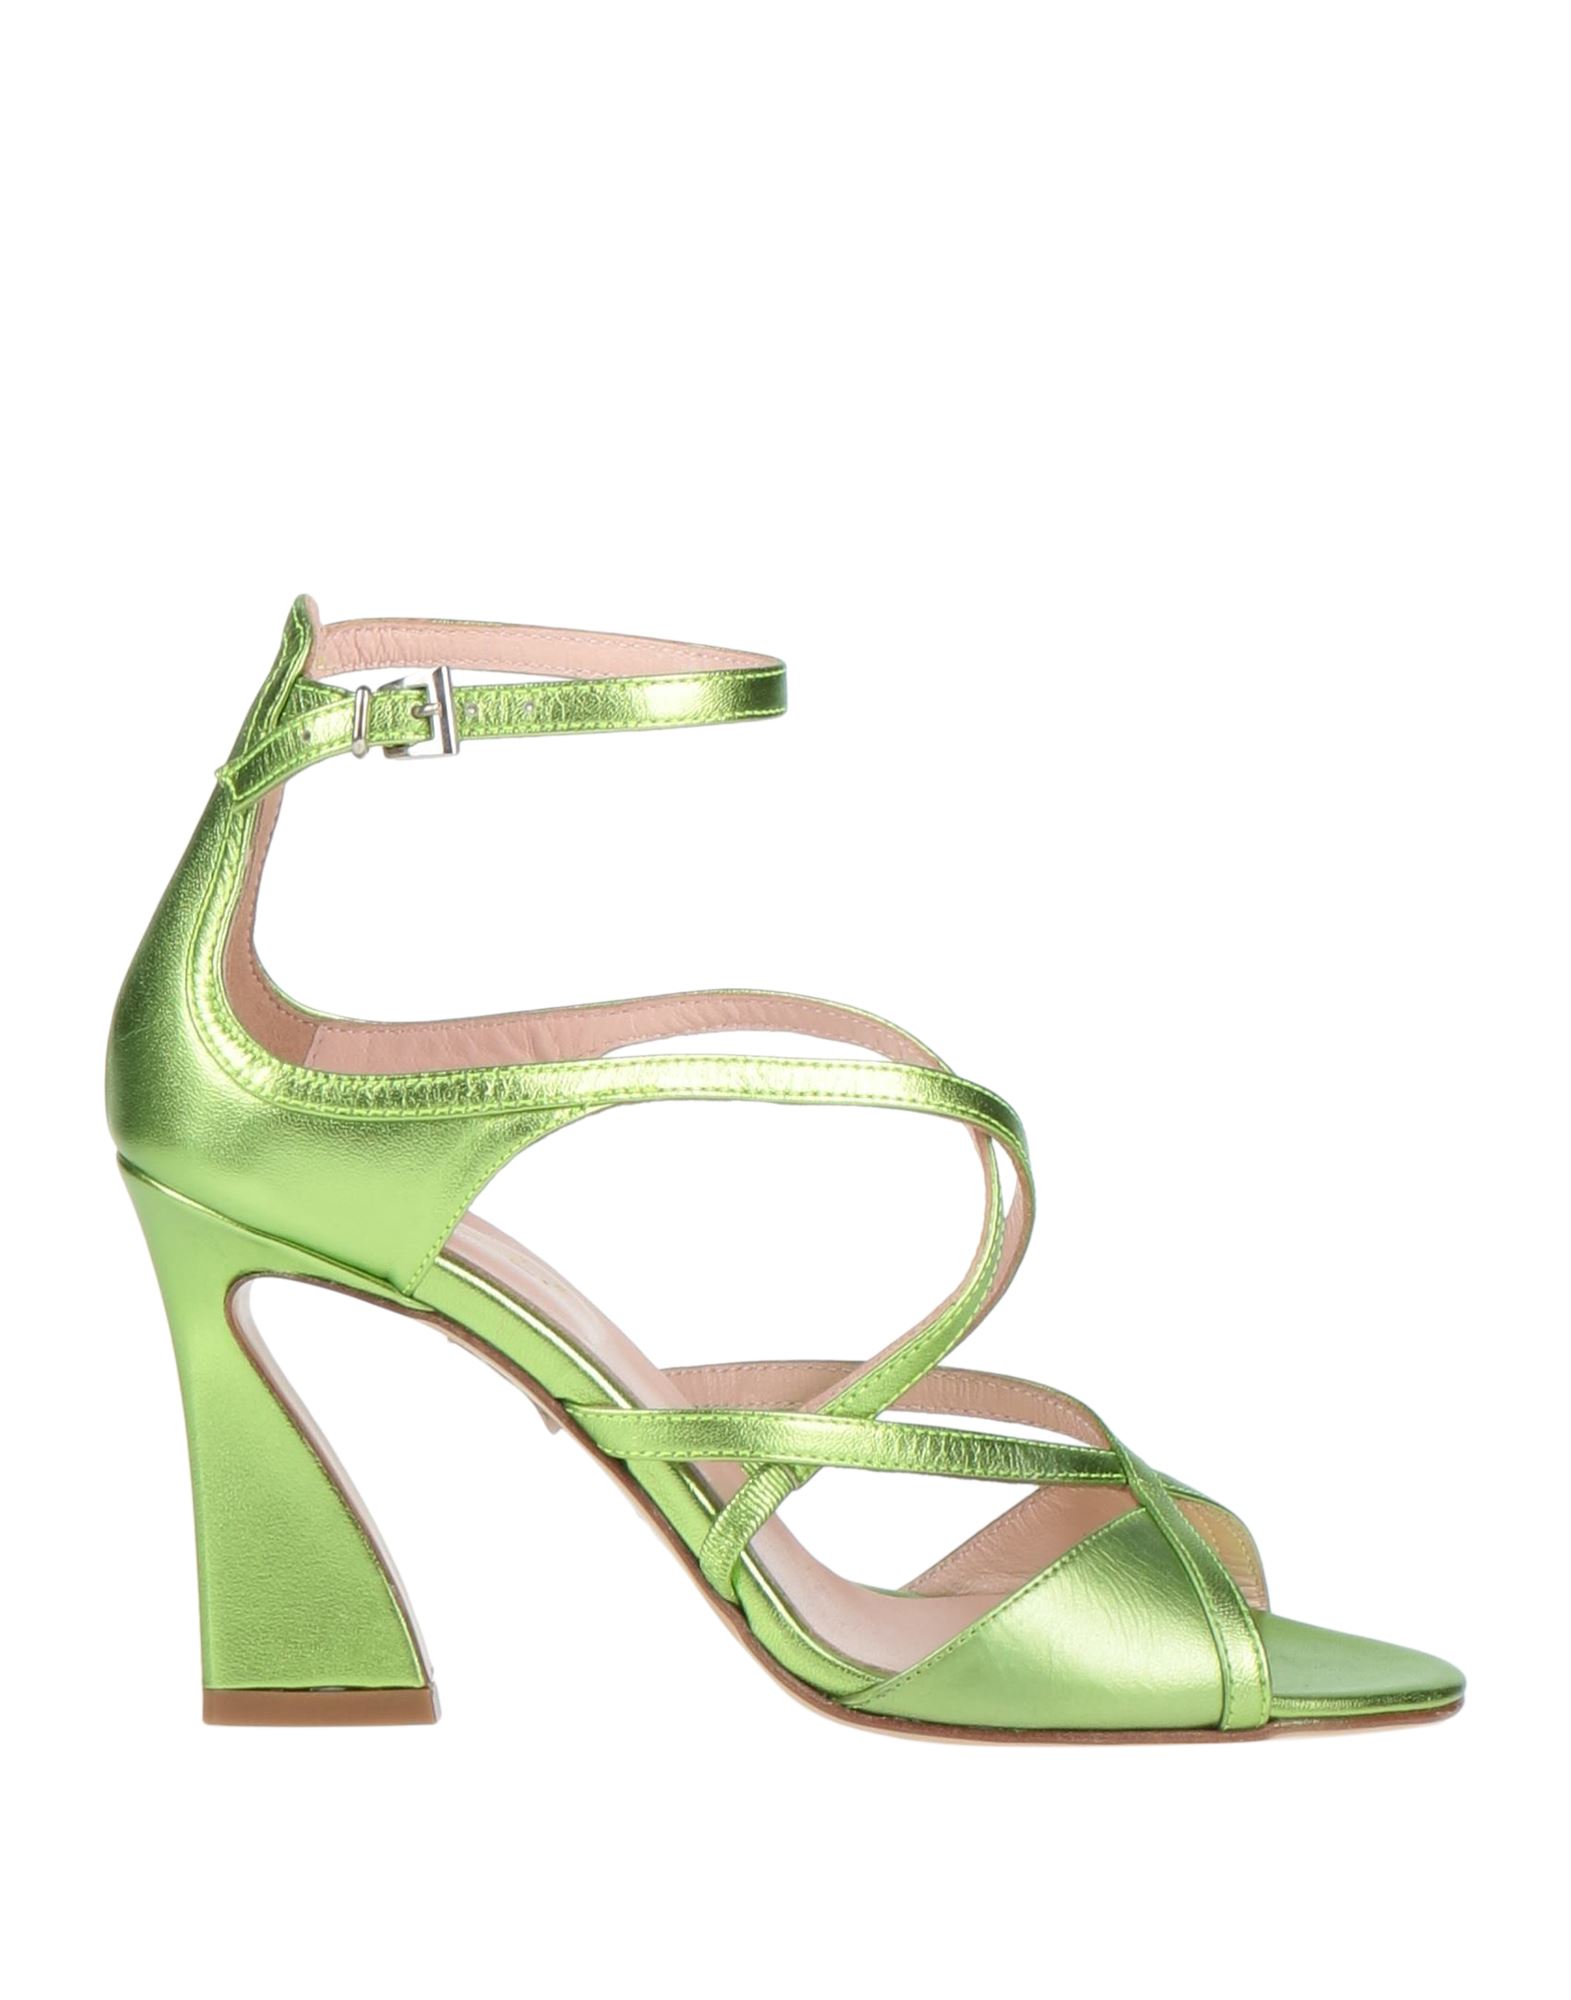 O'dan Li Woman Sandals Light Green Size 5 Leather